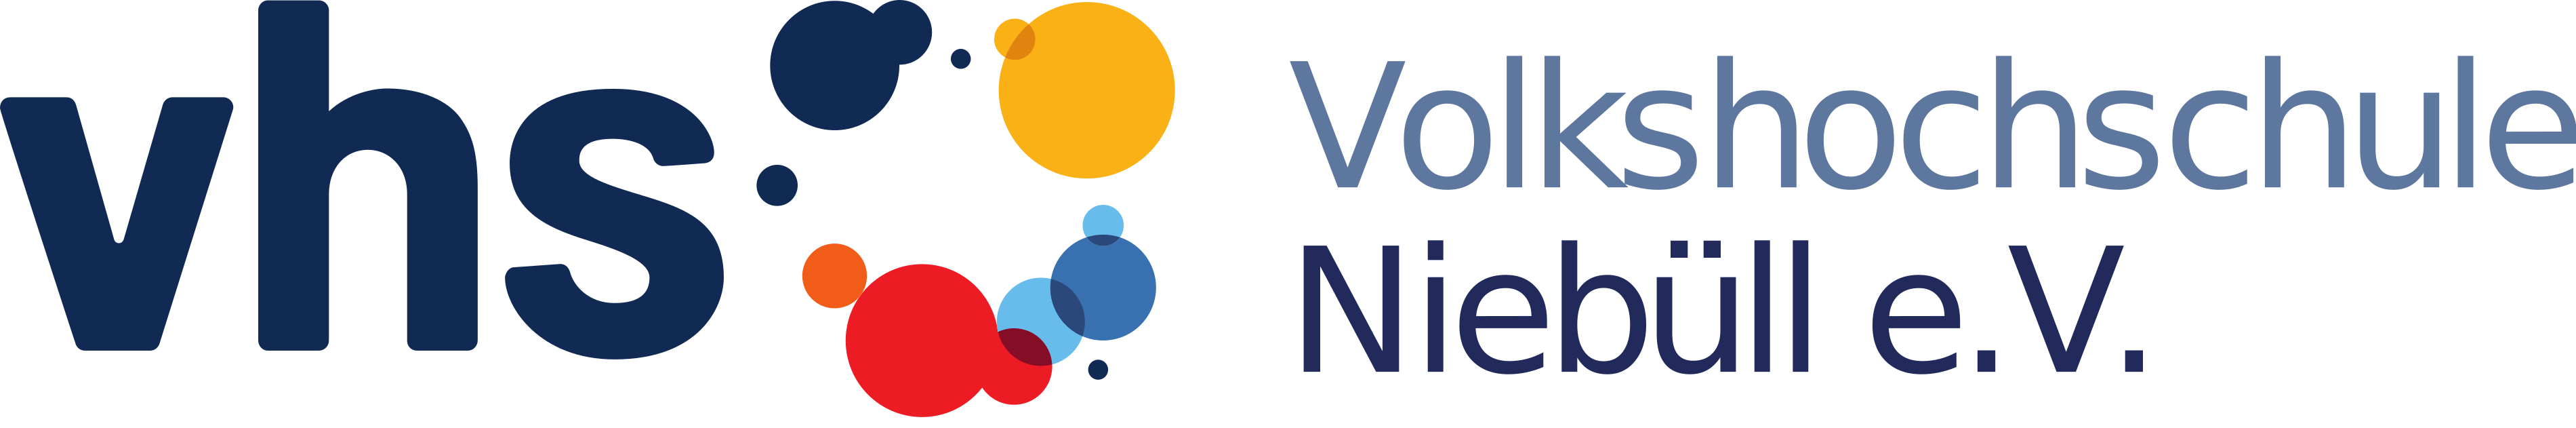 Logo vhs Niebüll